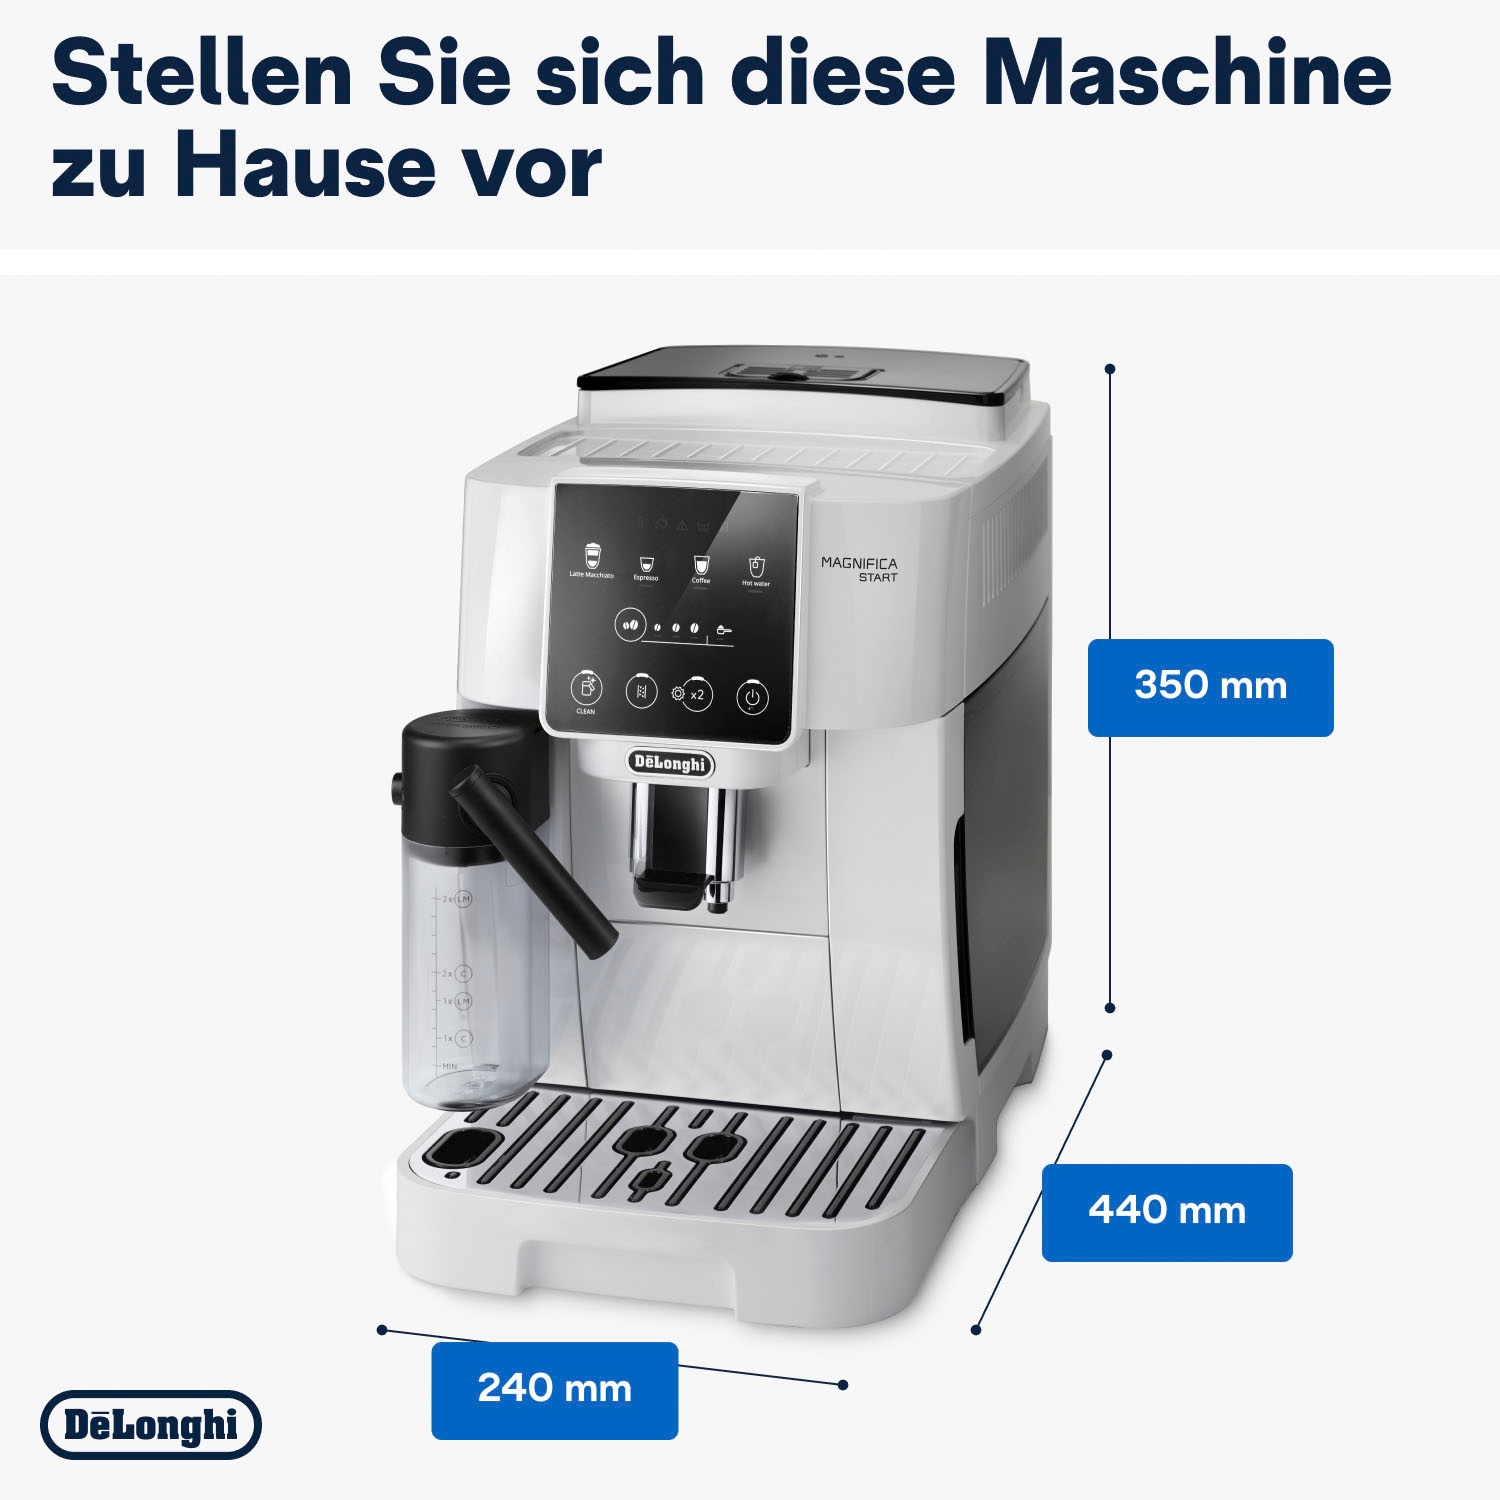 De'Longhi Kaffeevollautomat »Magnifica Start ECAM 220.61.W weiß«